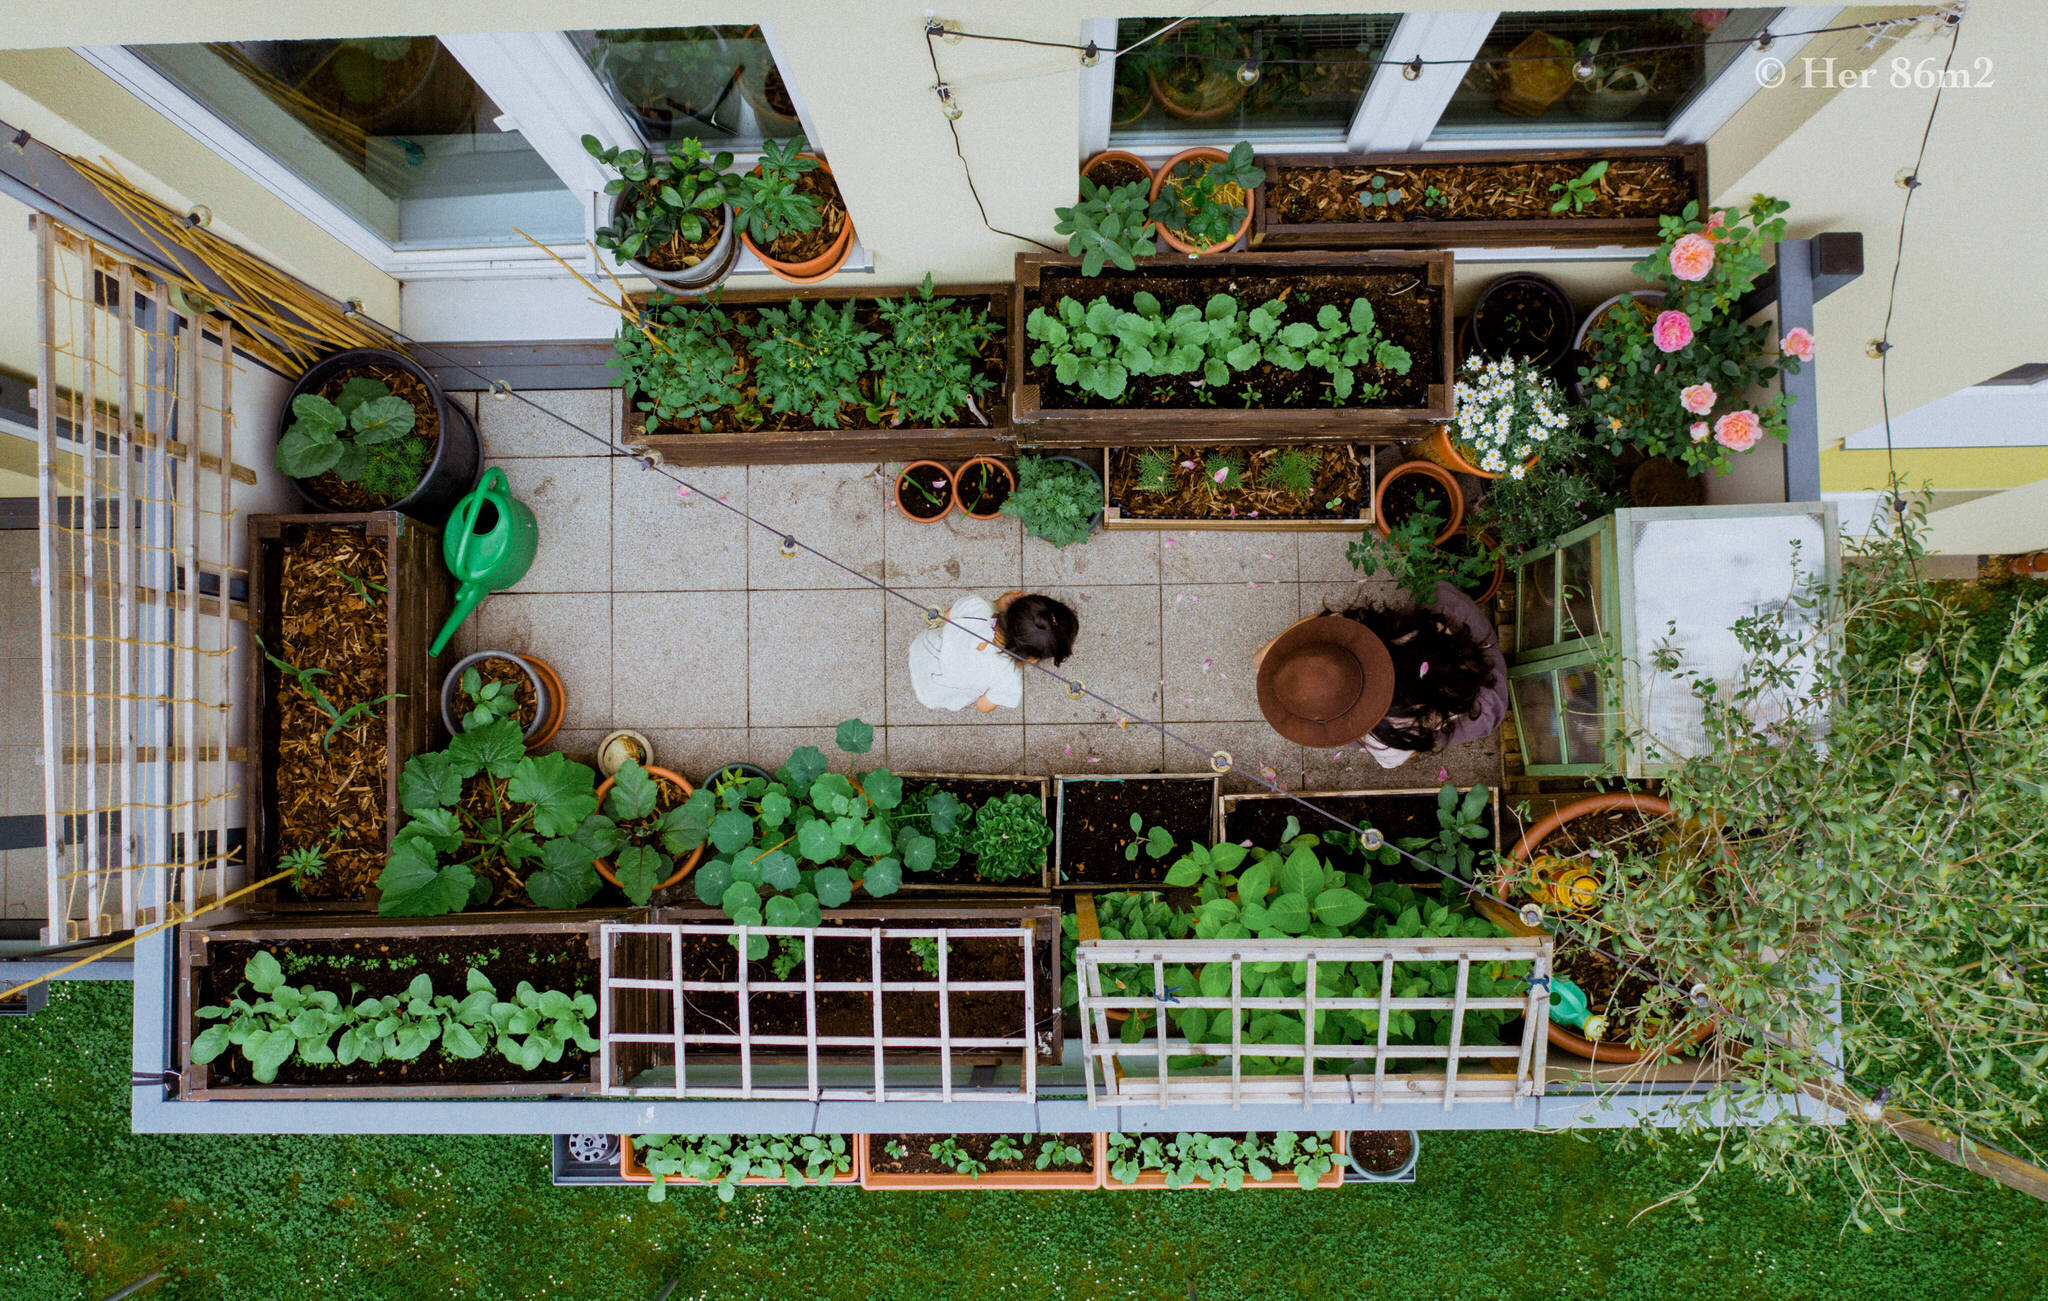 Her 86m2 - My 8m² Balcony Vegetable Garden | A Wonderful 200 Day Journey 50b.jpg